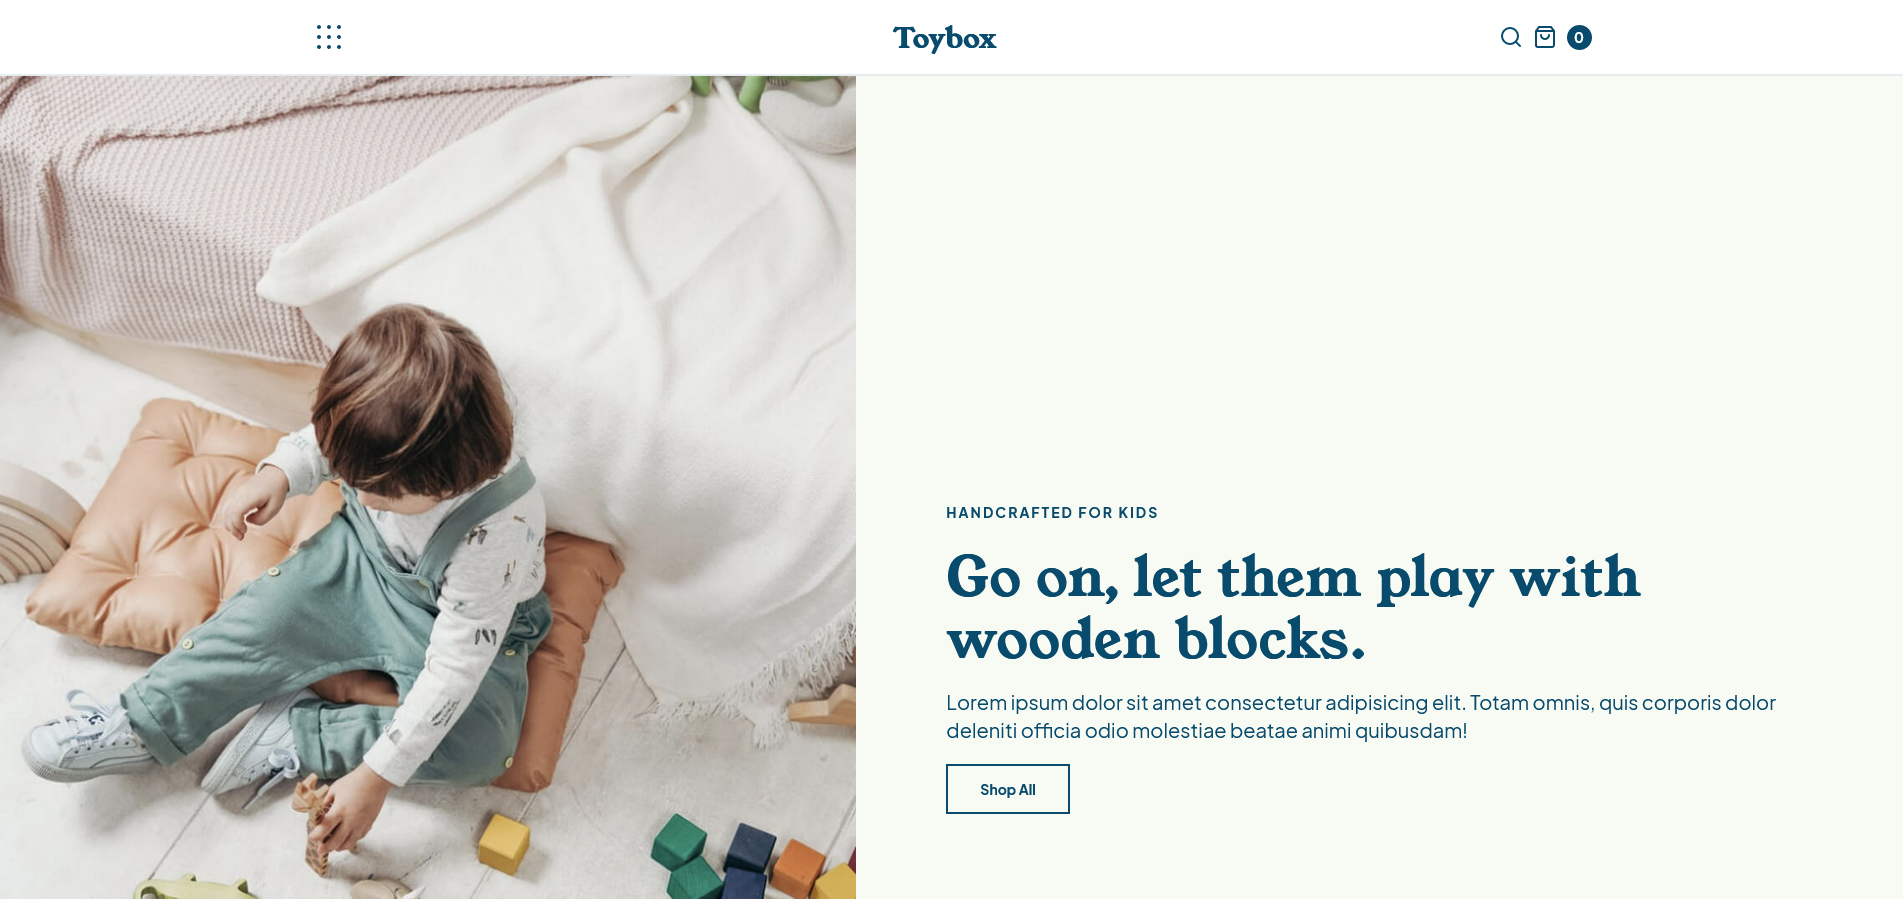 A screenshot of the website ToyBox